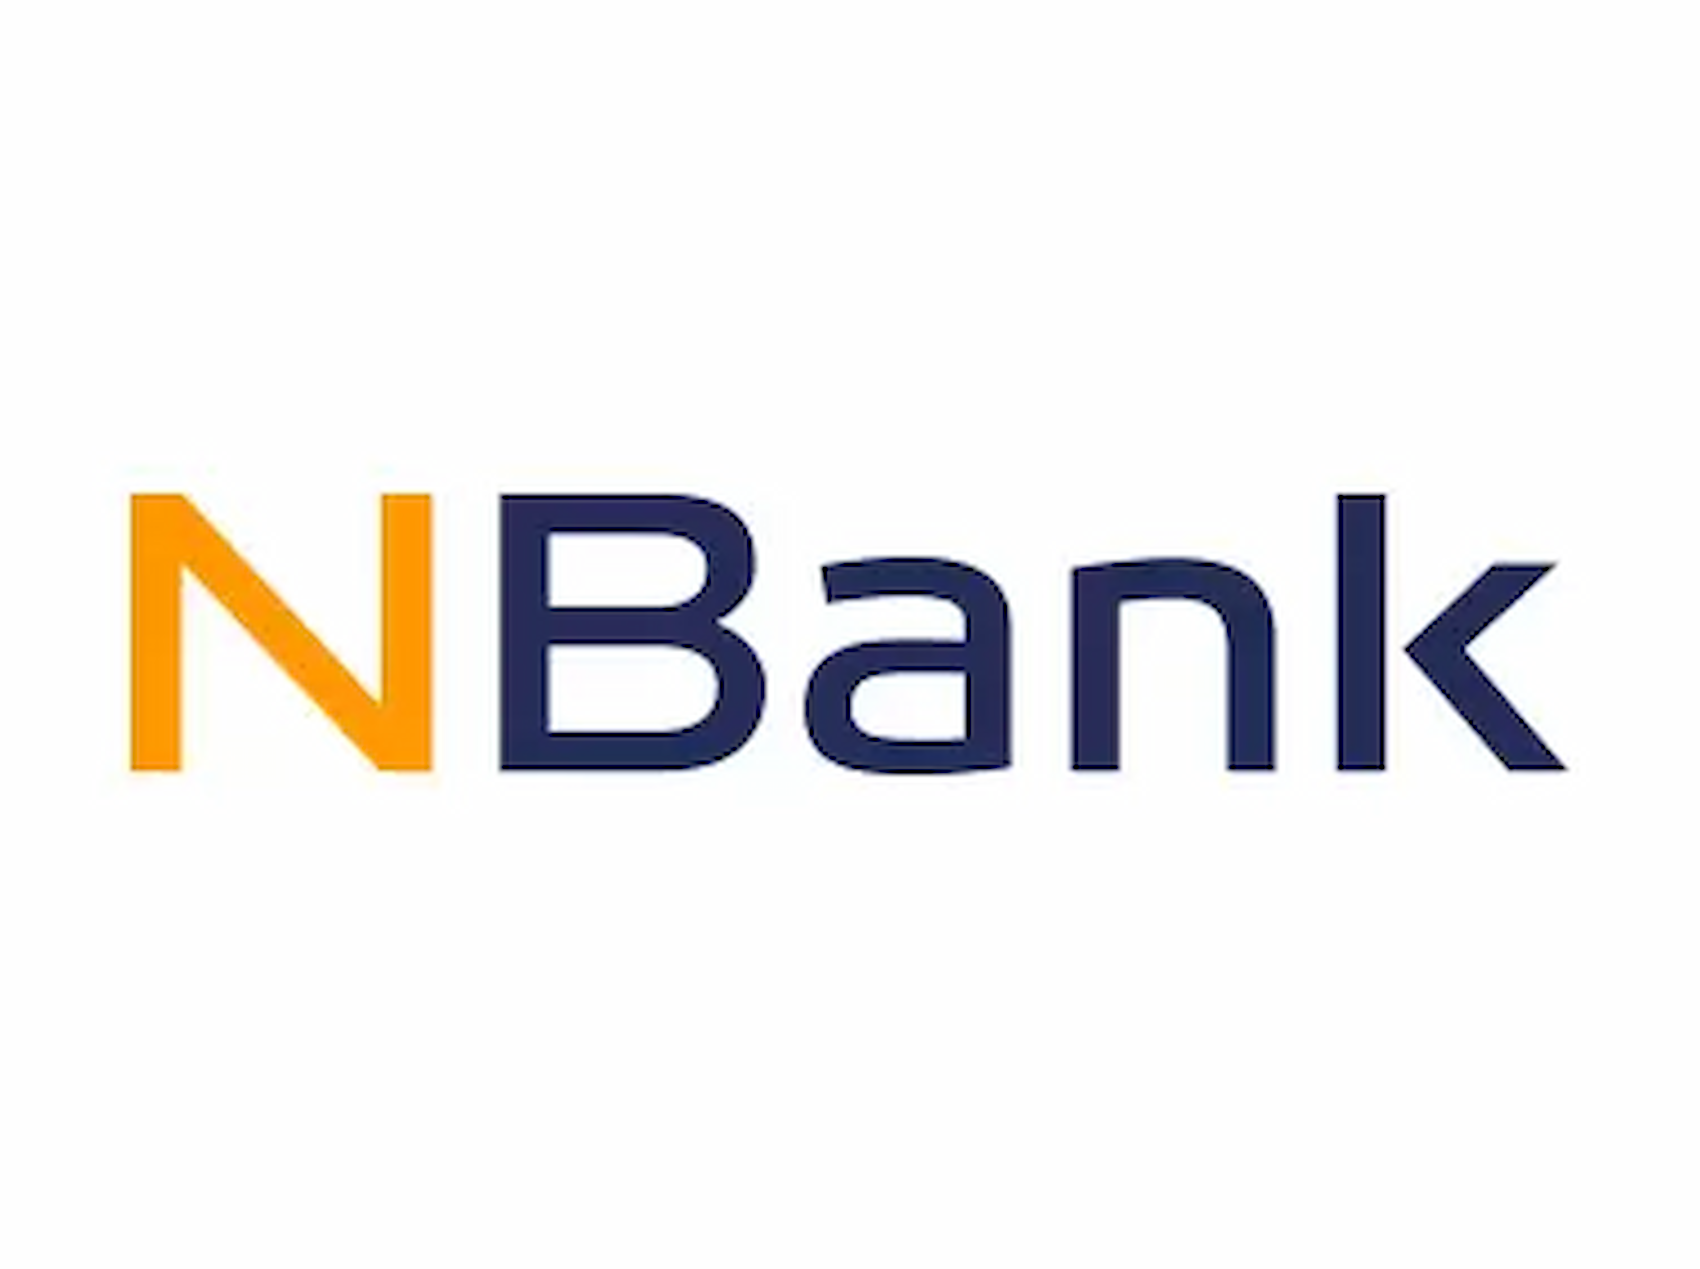 Download NBank Logo PNG and Vector (PDF, SVG, Ai, EPS) Free